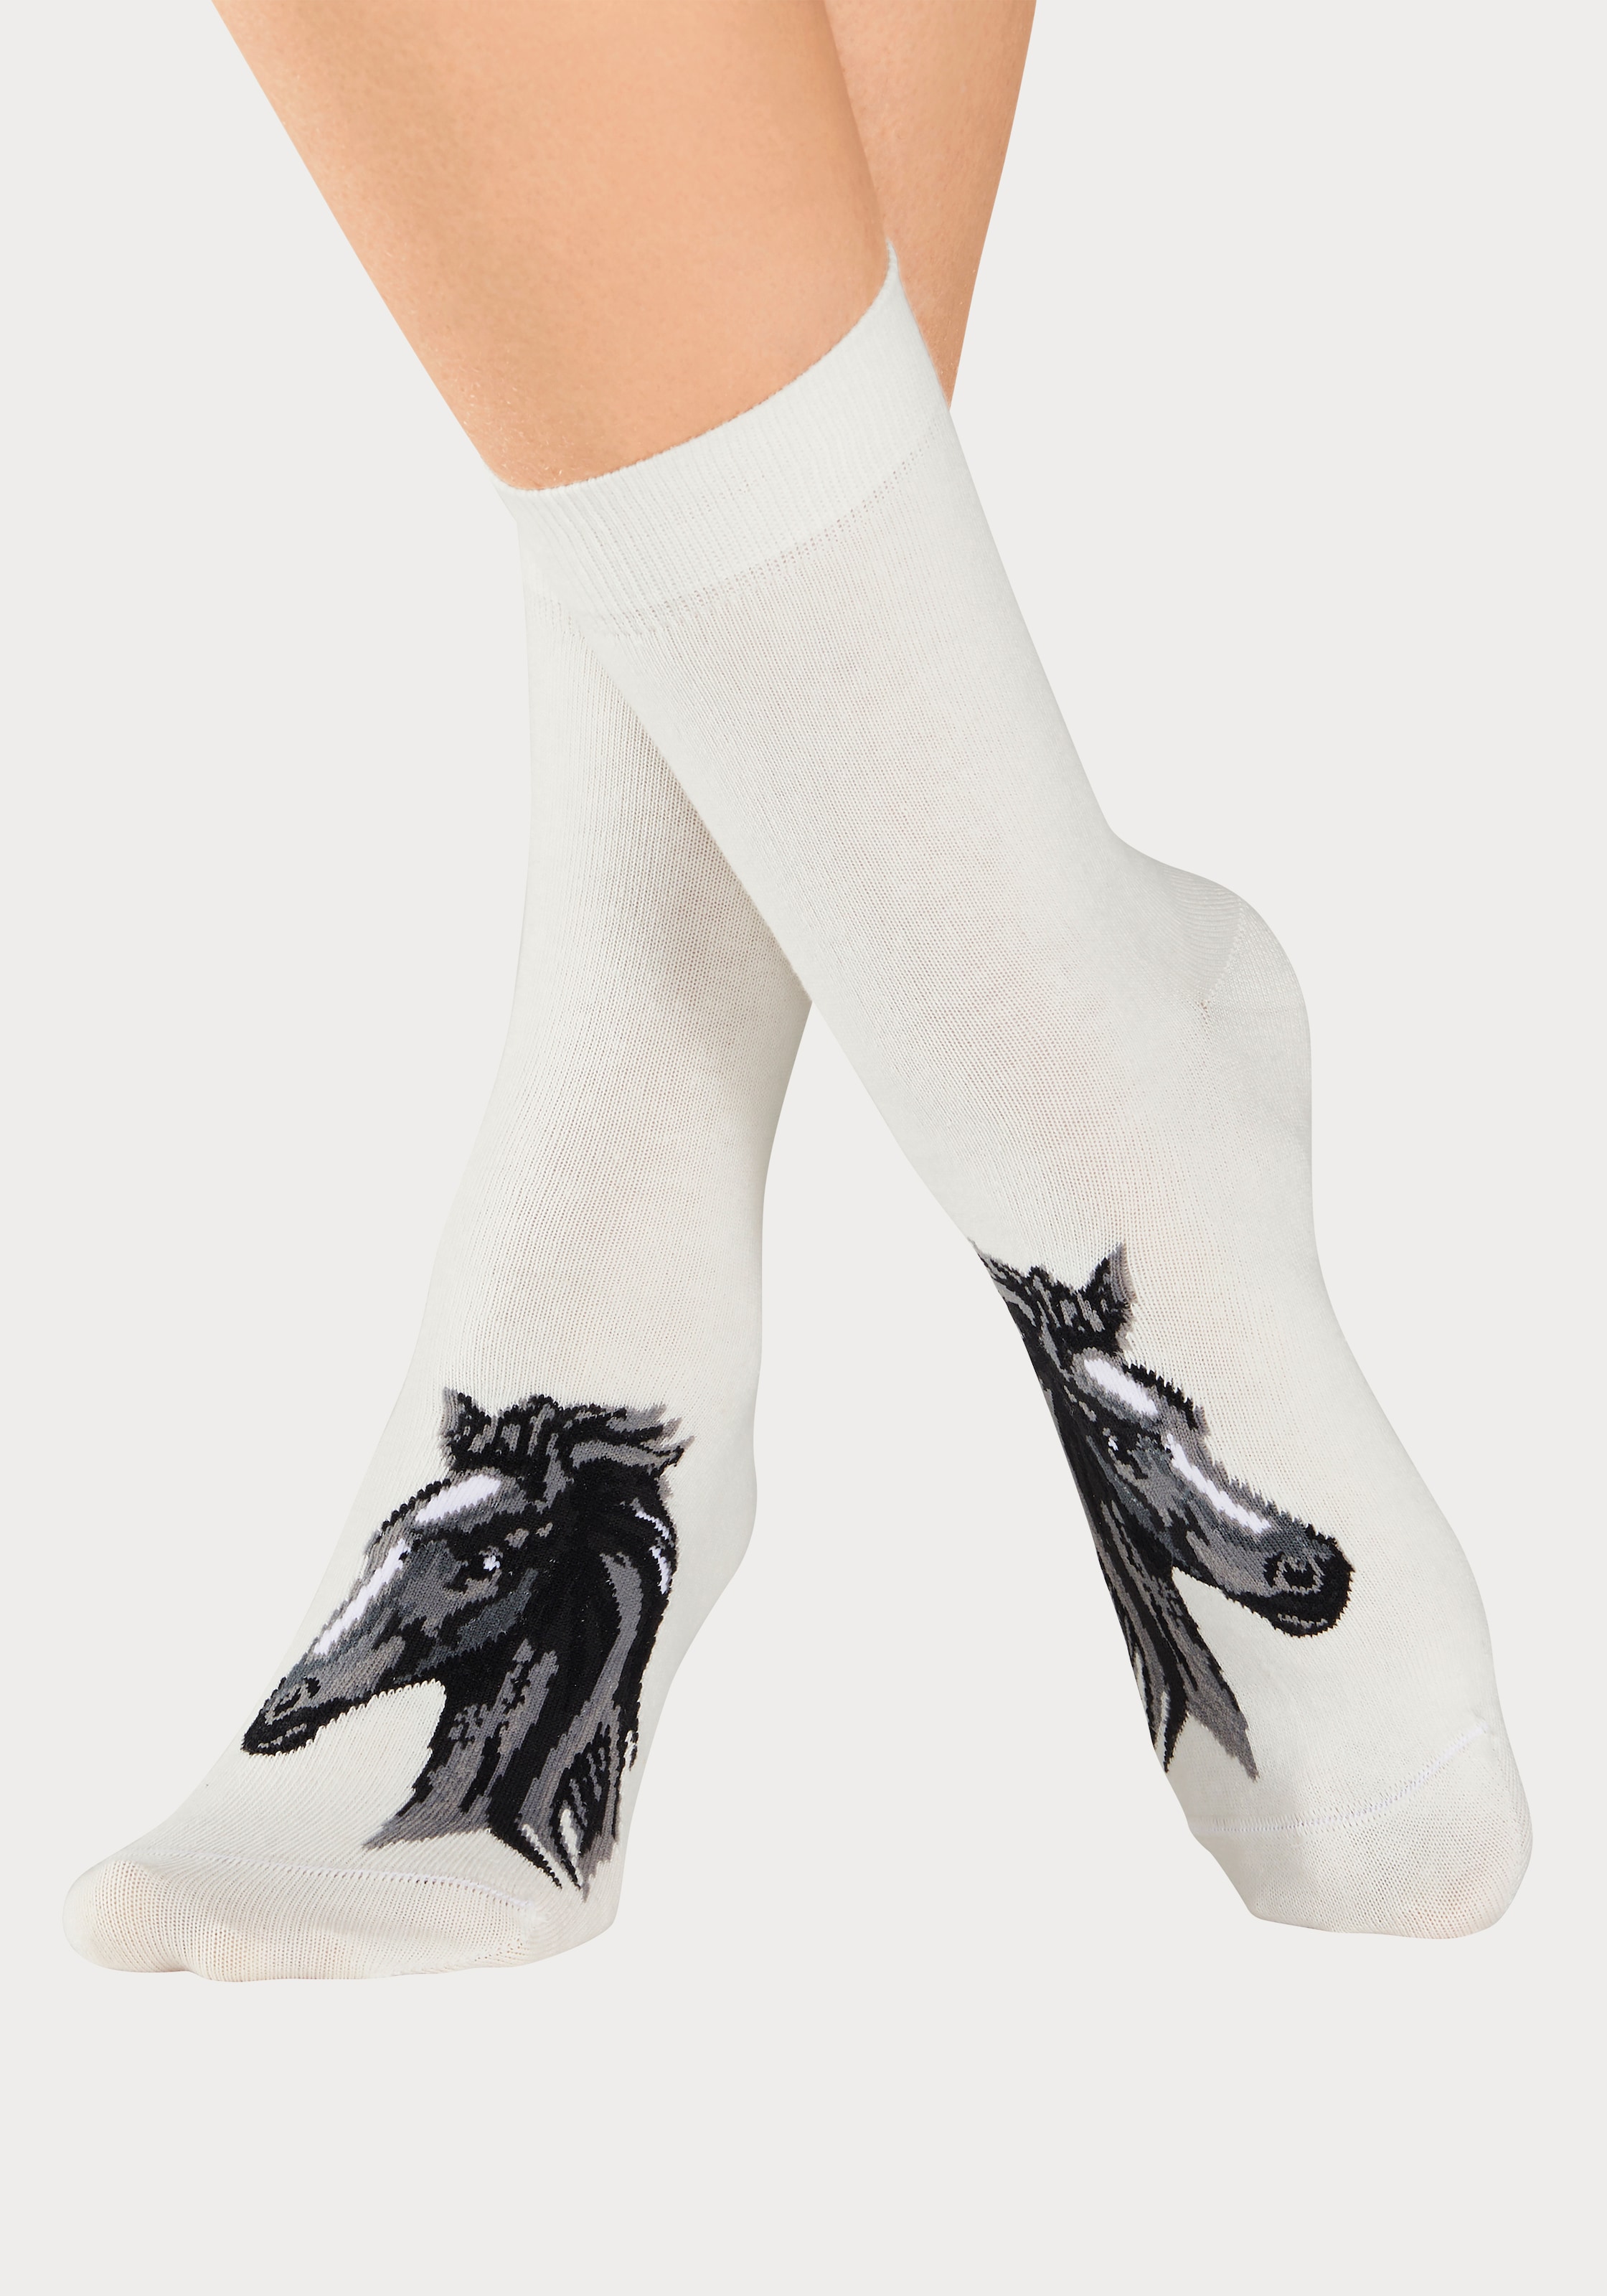 H.I.S Socken, (5 Paar), mit verschiedenen Pferdemotiven